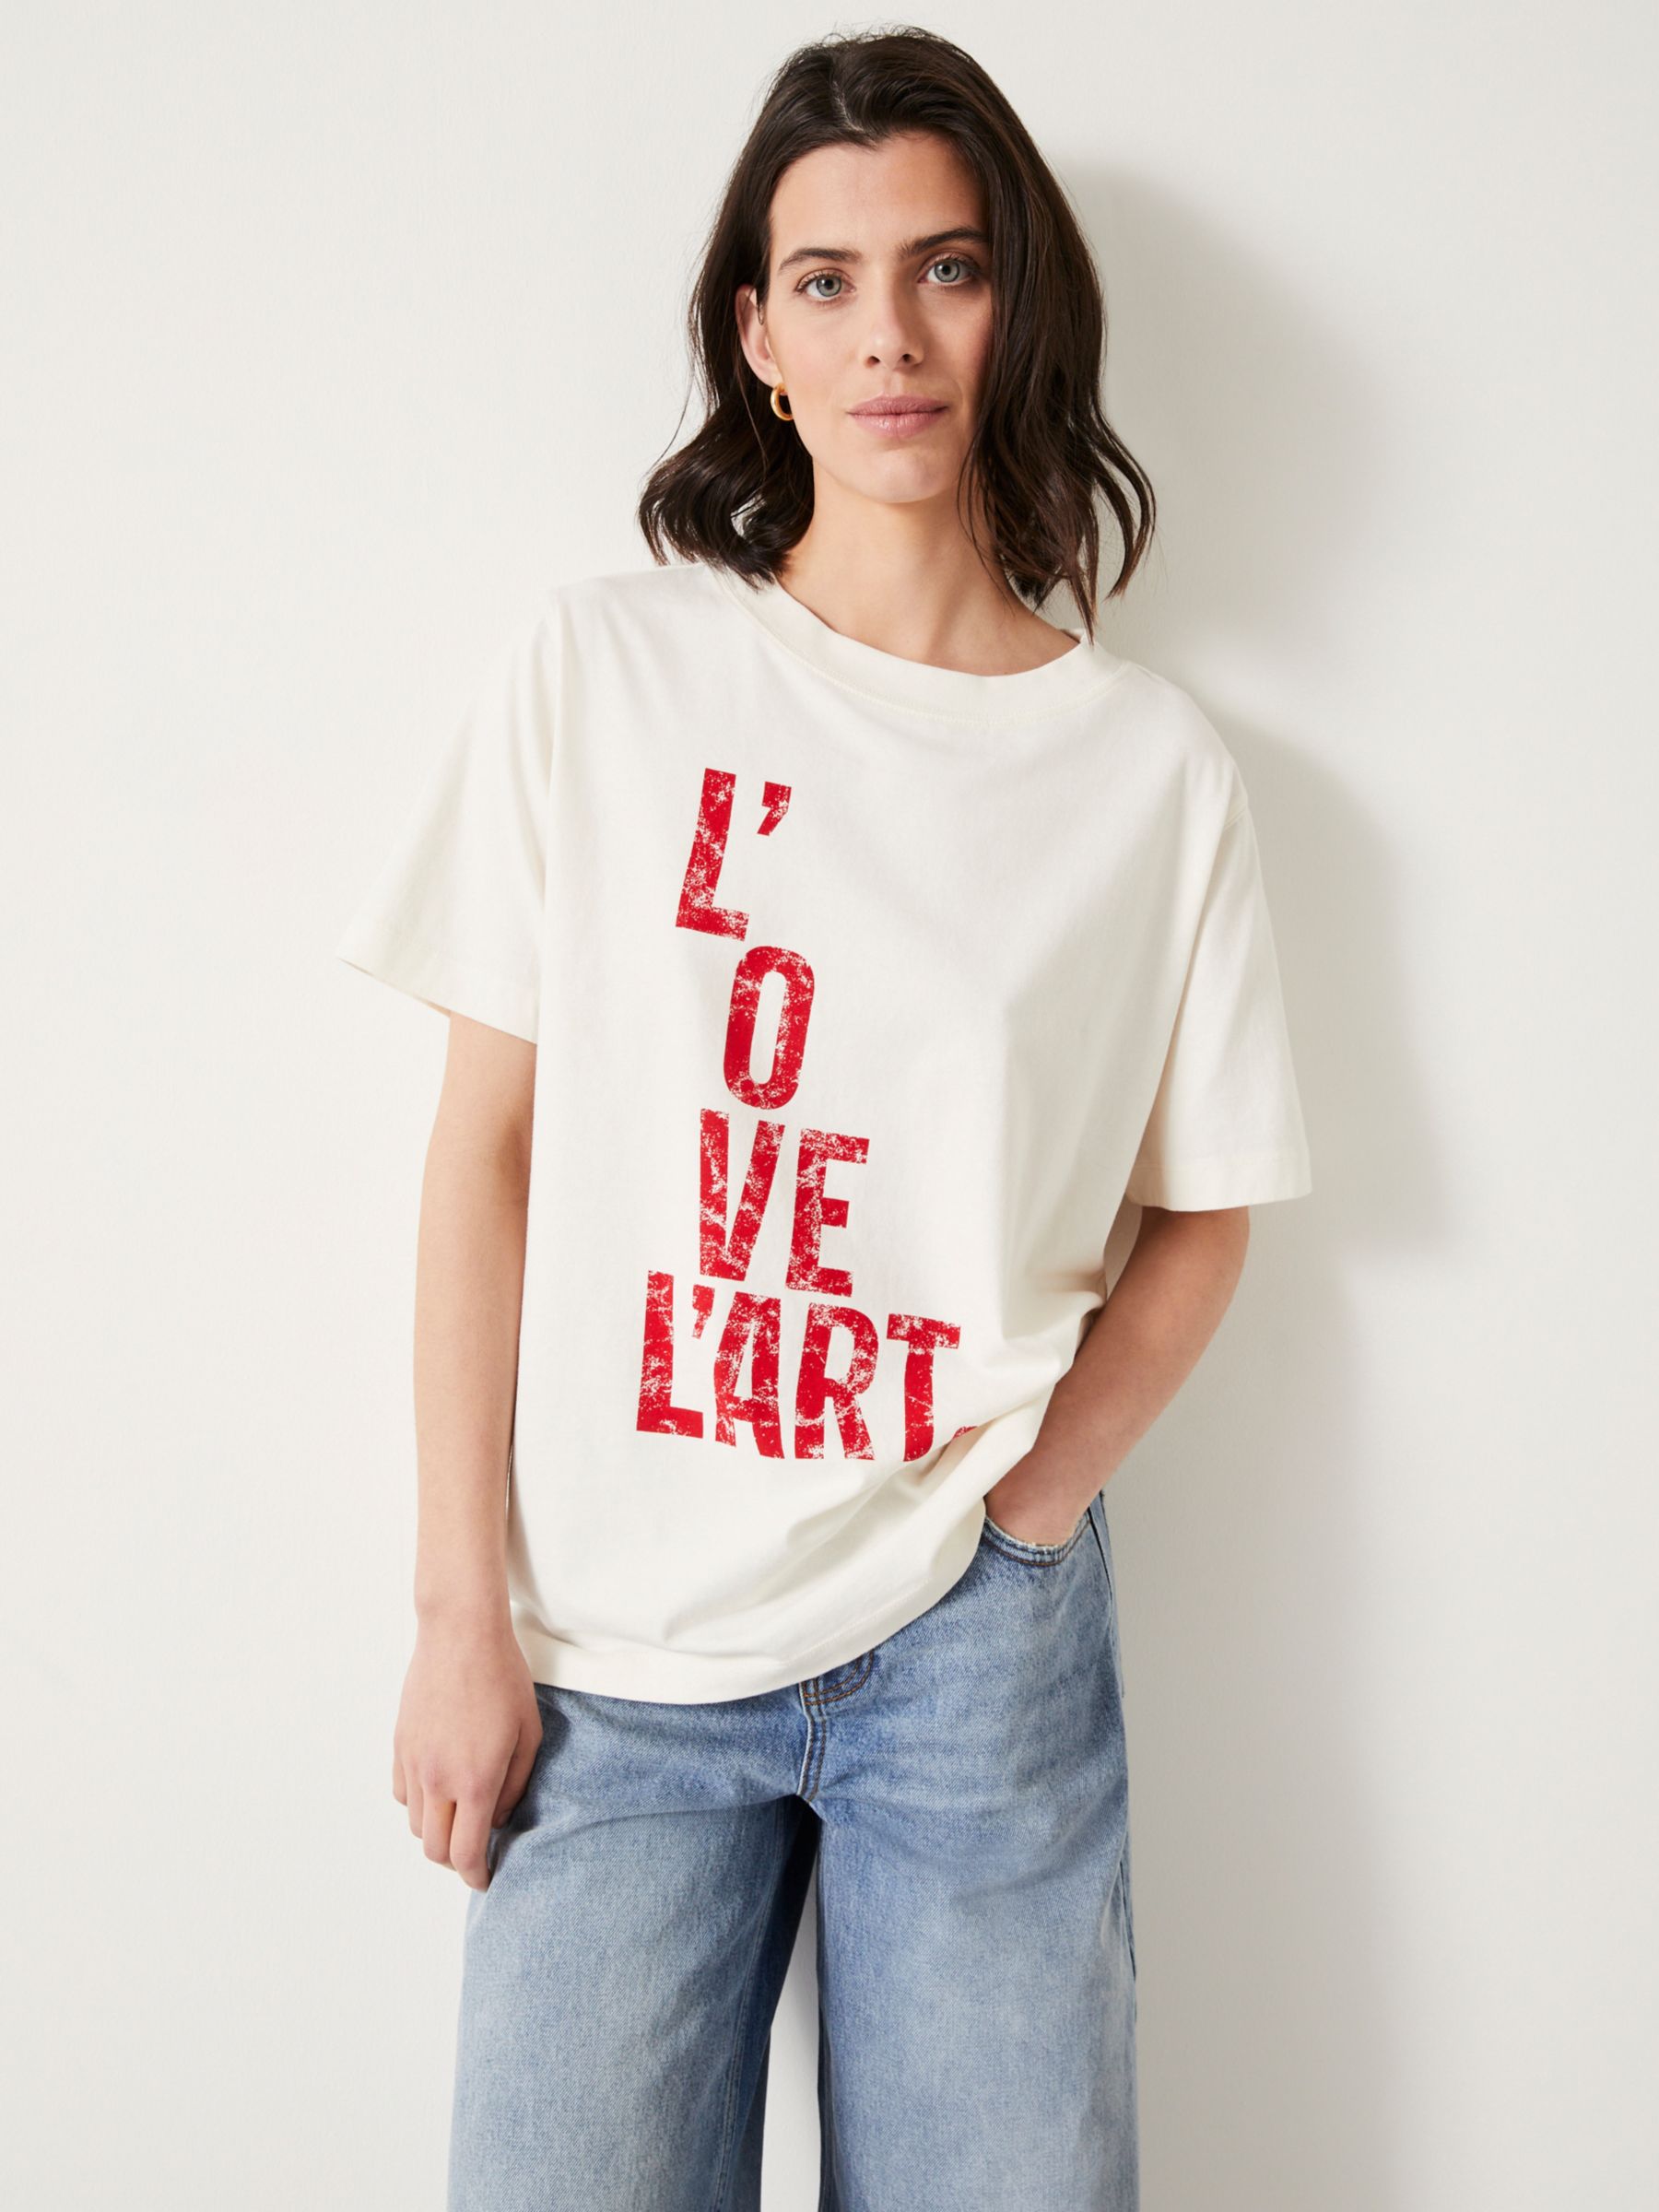 HUSH L'ove L'art T-Shirt